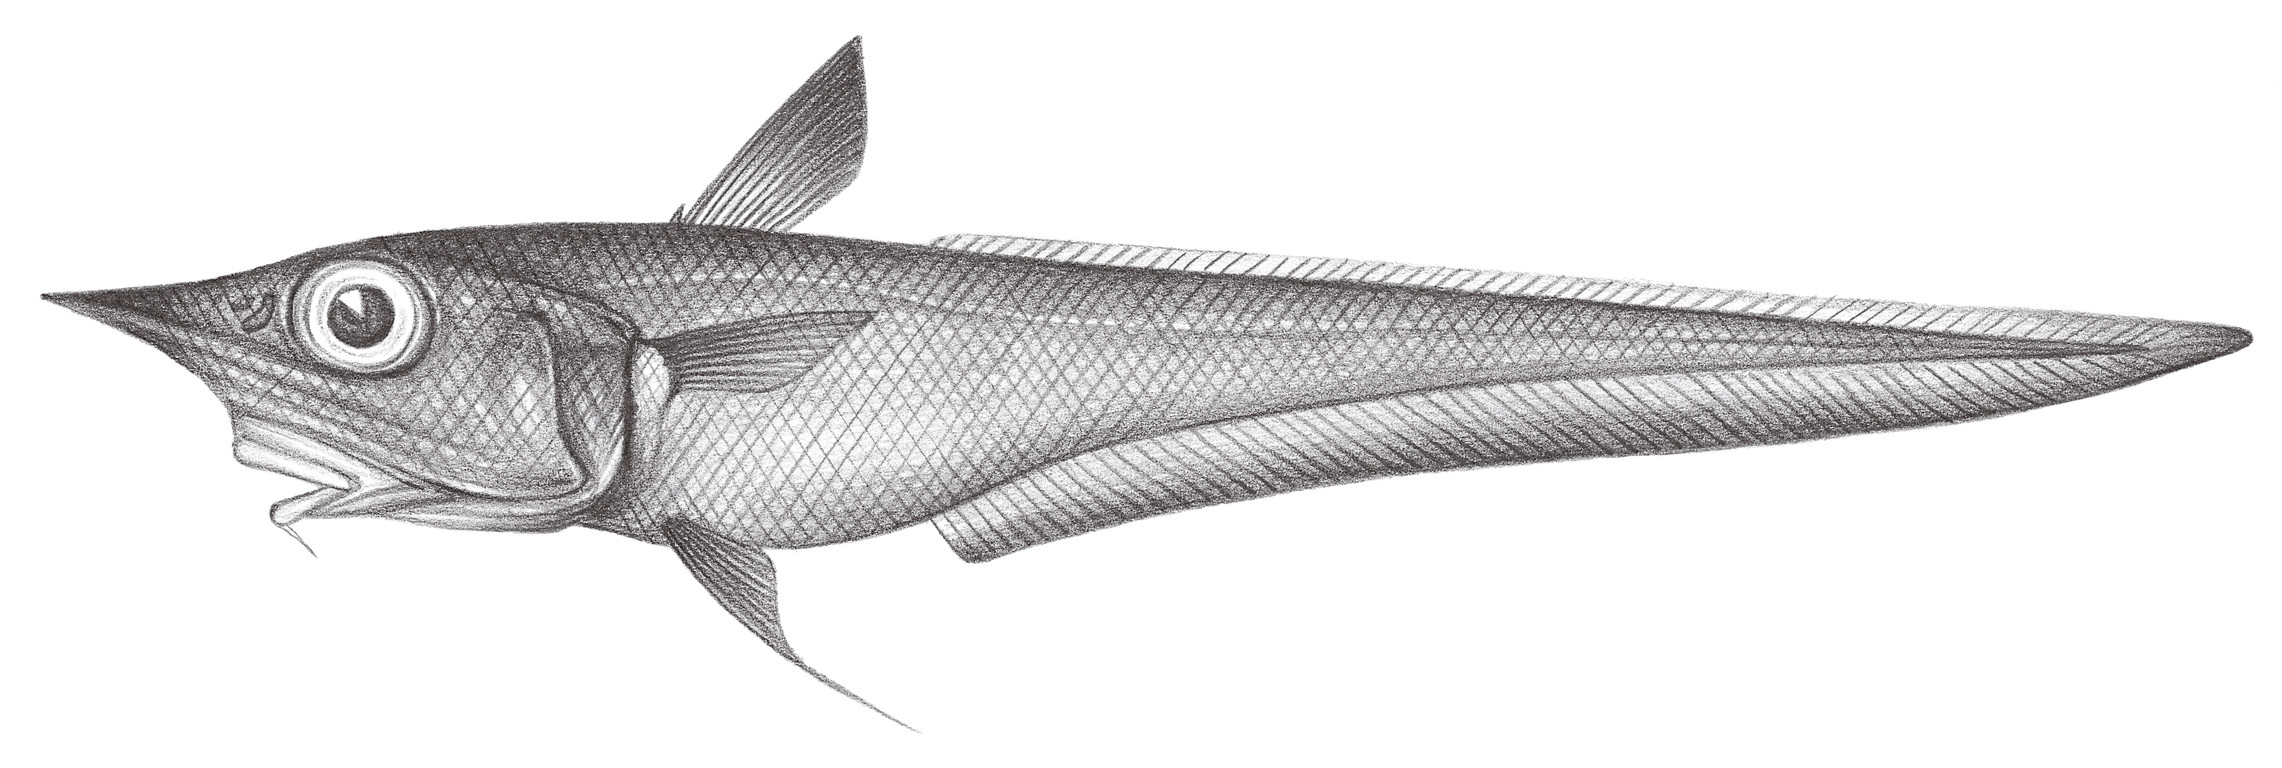 560.	日本腔吻鱈 Caelorinchus japonicus (Temminck & Schlegel, 1846)